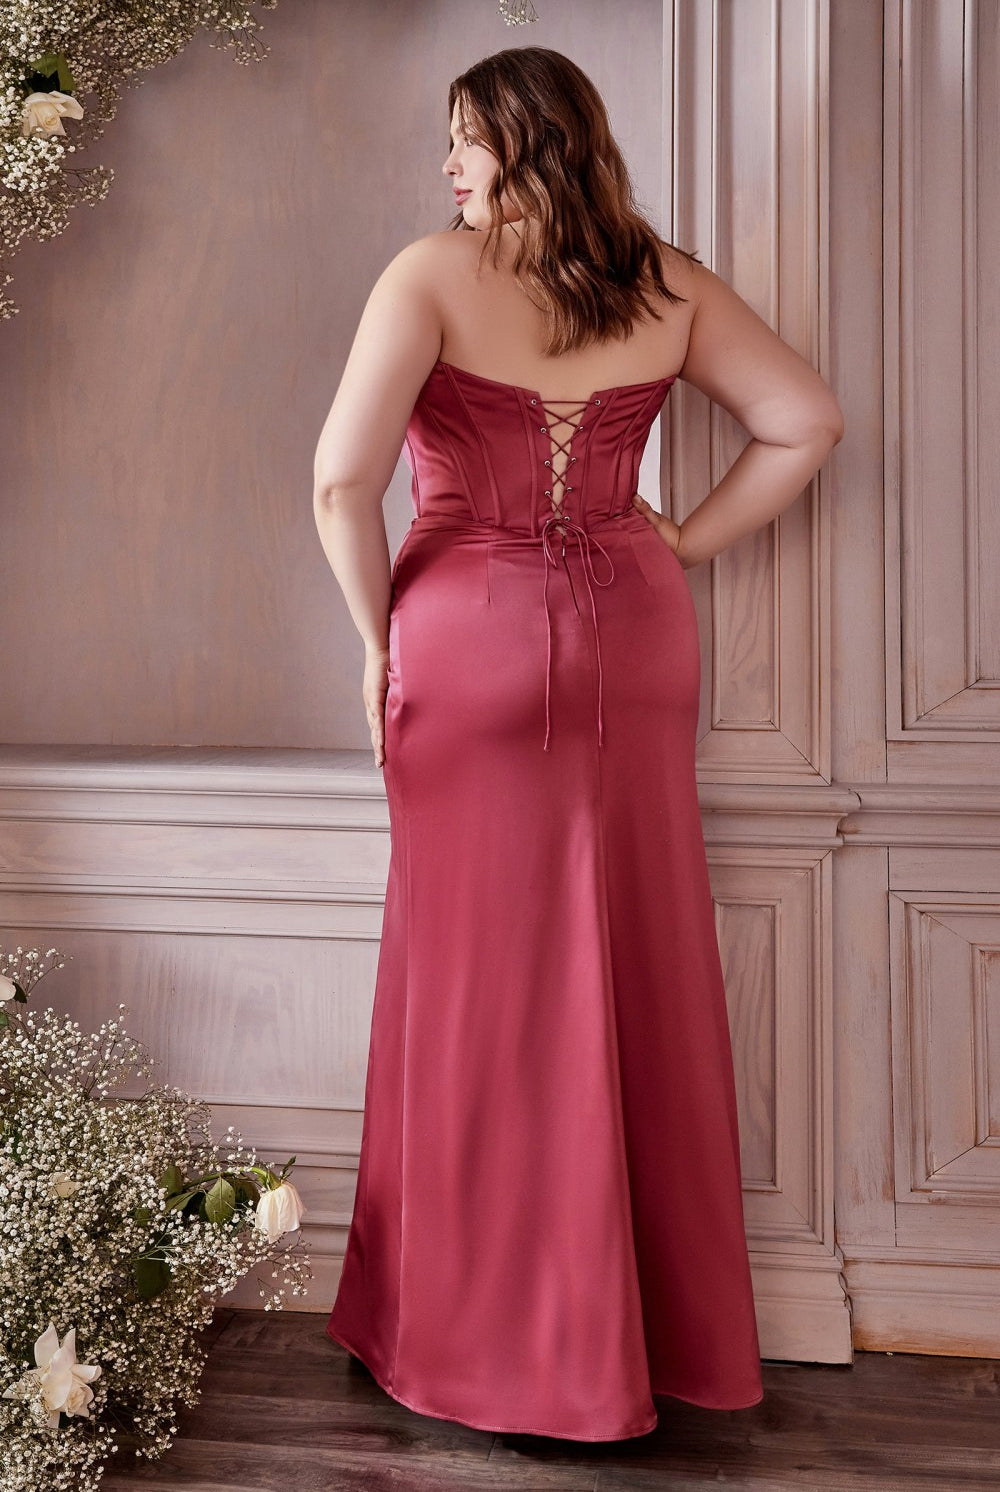 Satin Off-shoulder Prom Dress. Vintage Laced Corset, Waist Wrapped, High Leg Slit-smcdress